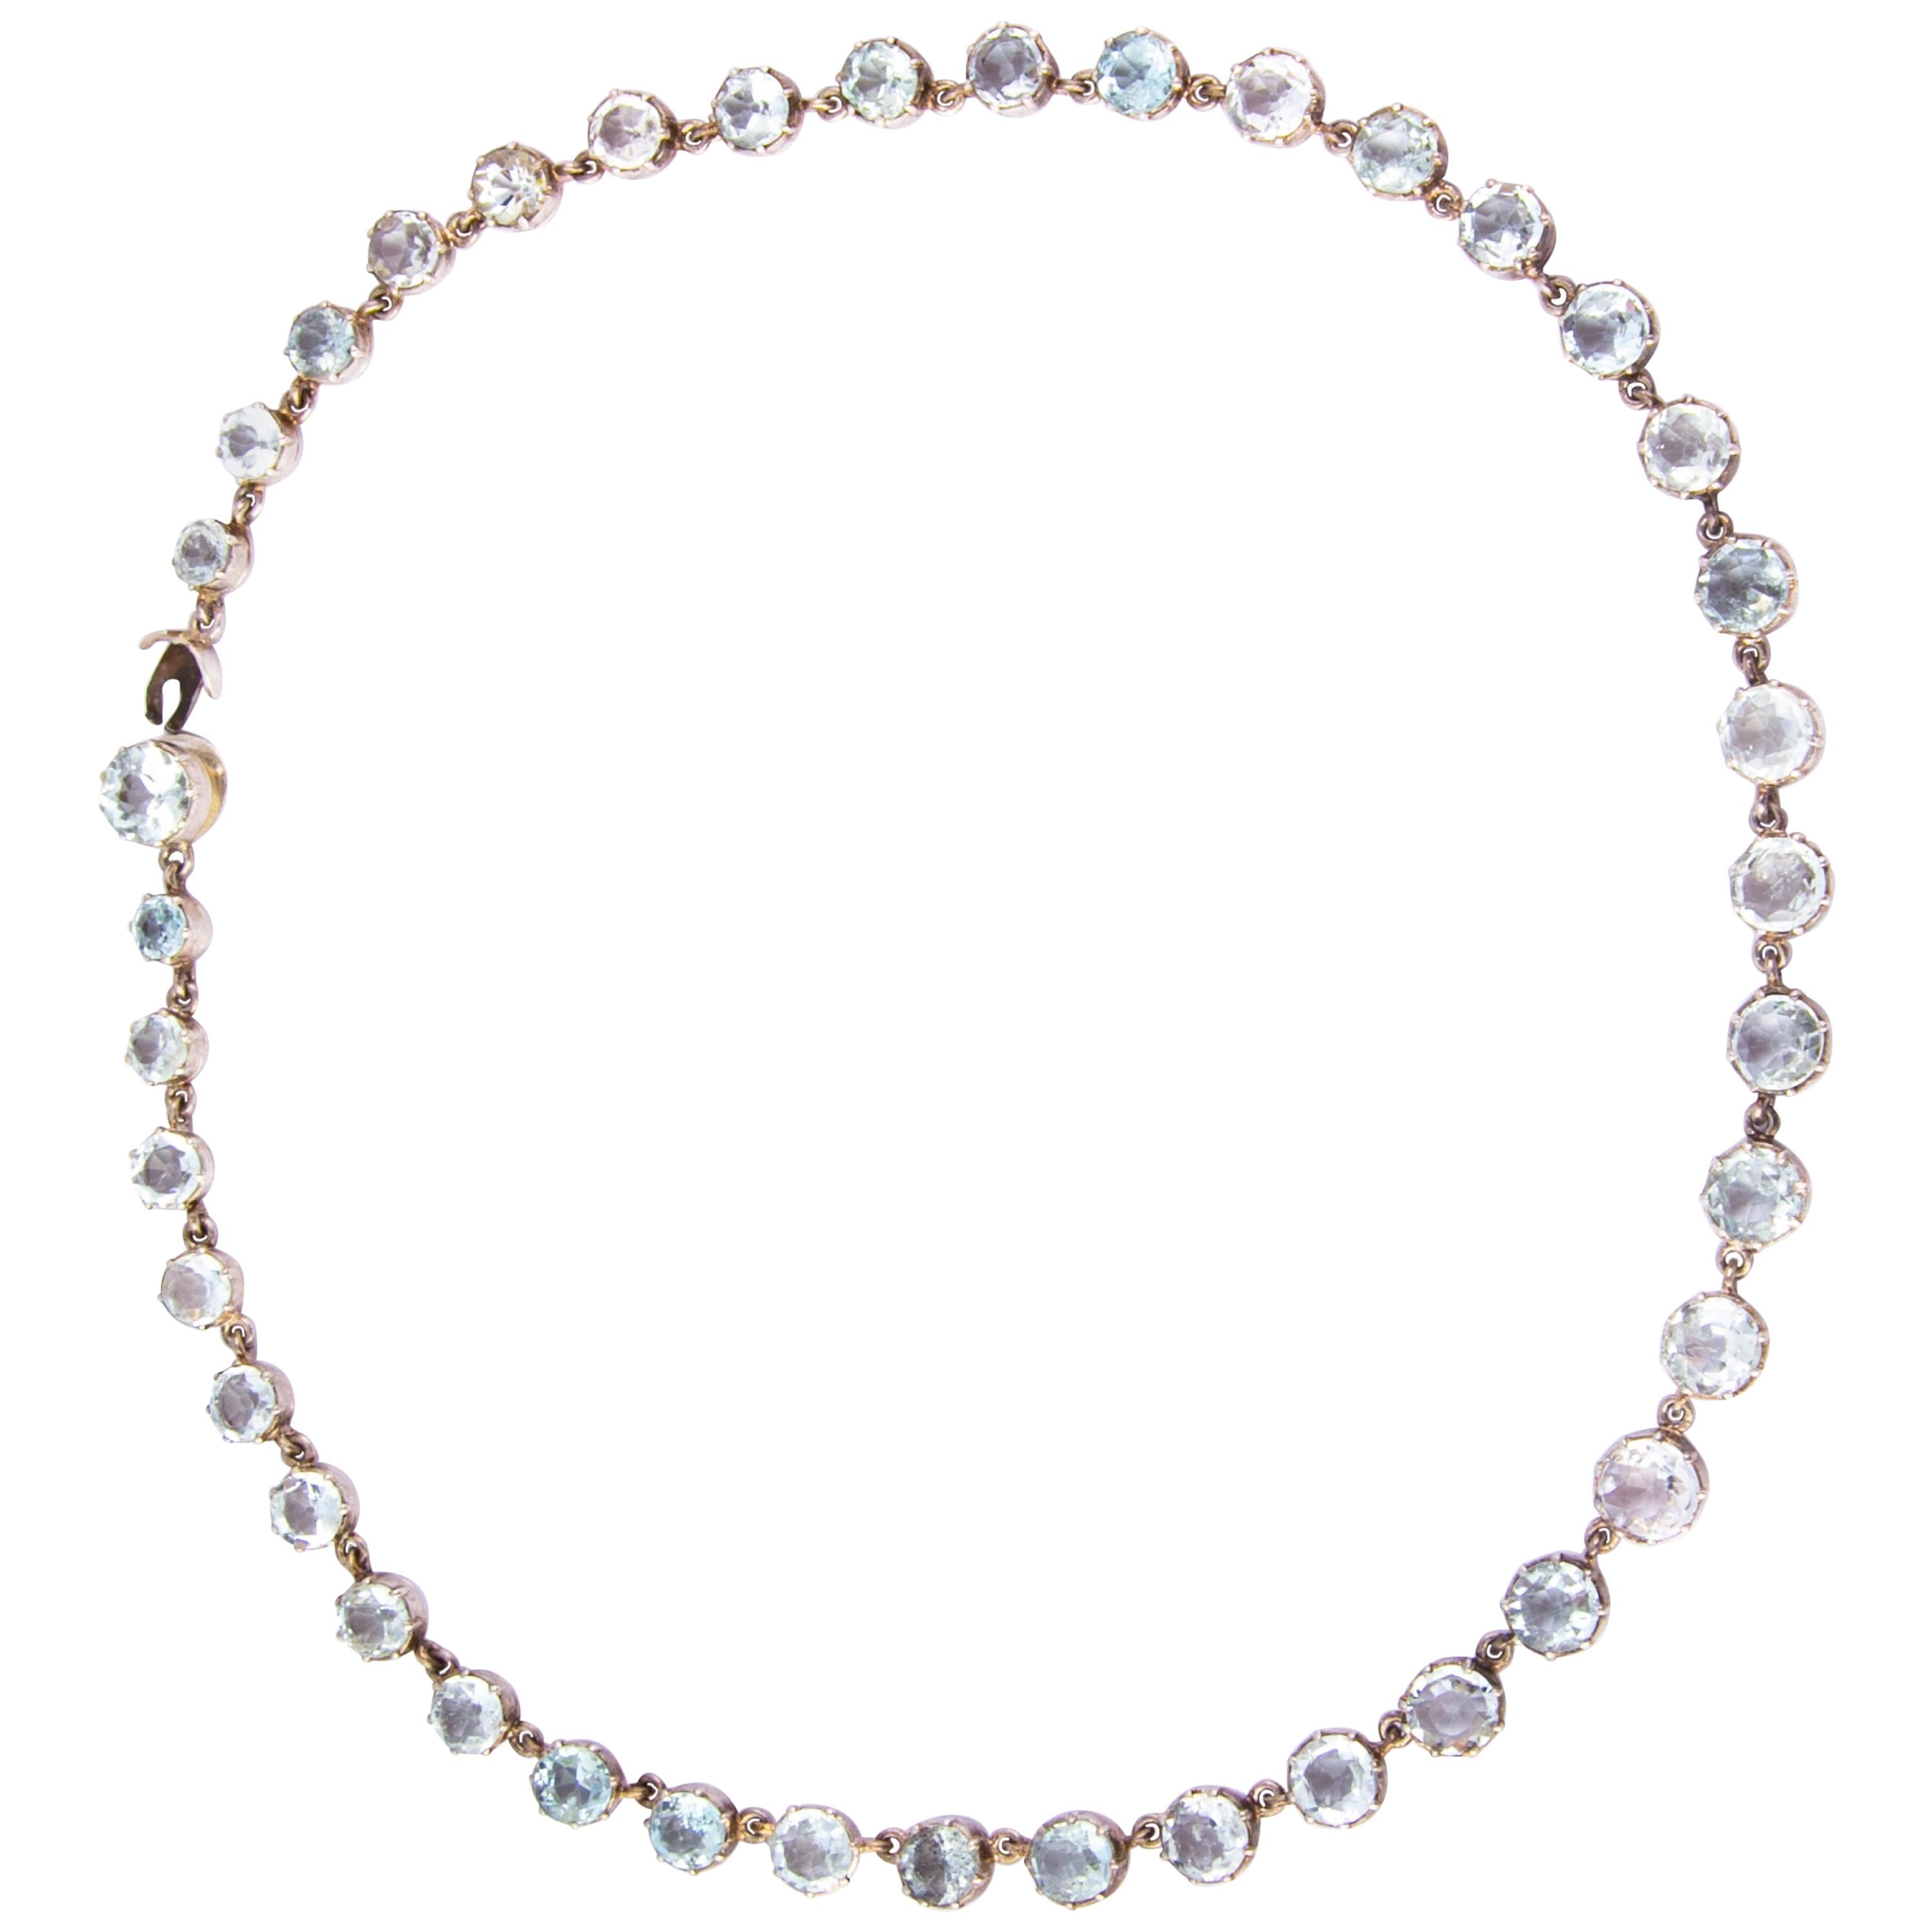 Victorian Aqua and Silver Riviere Necklace